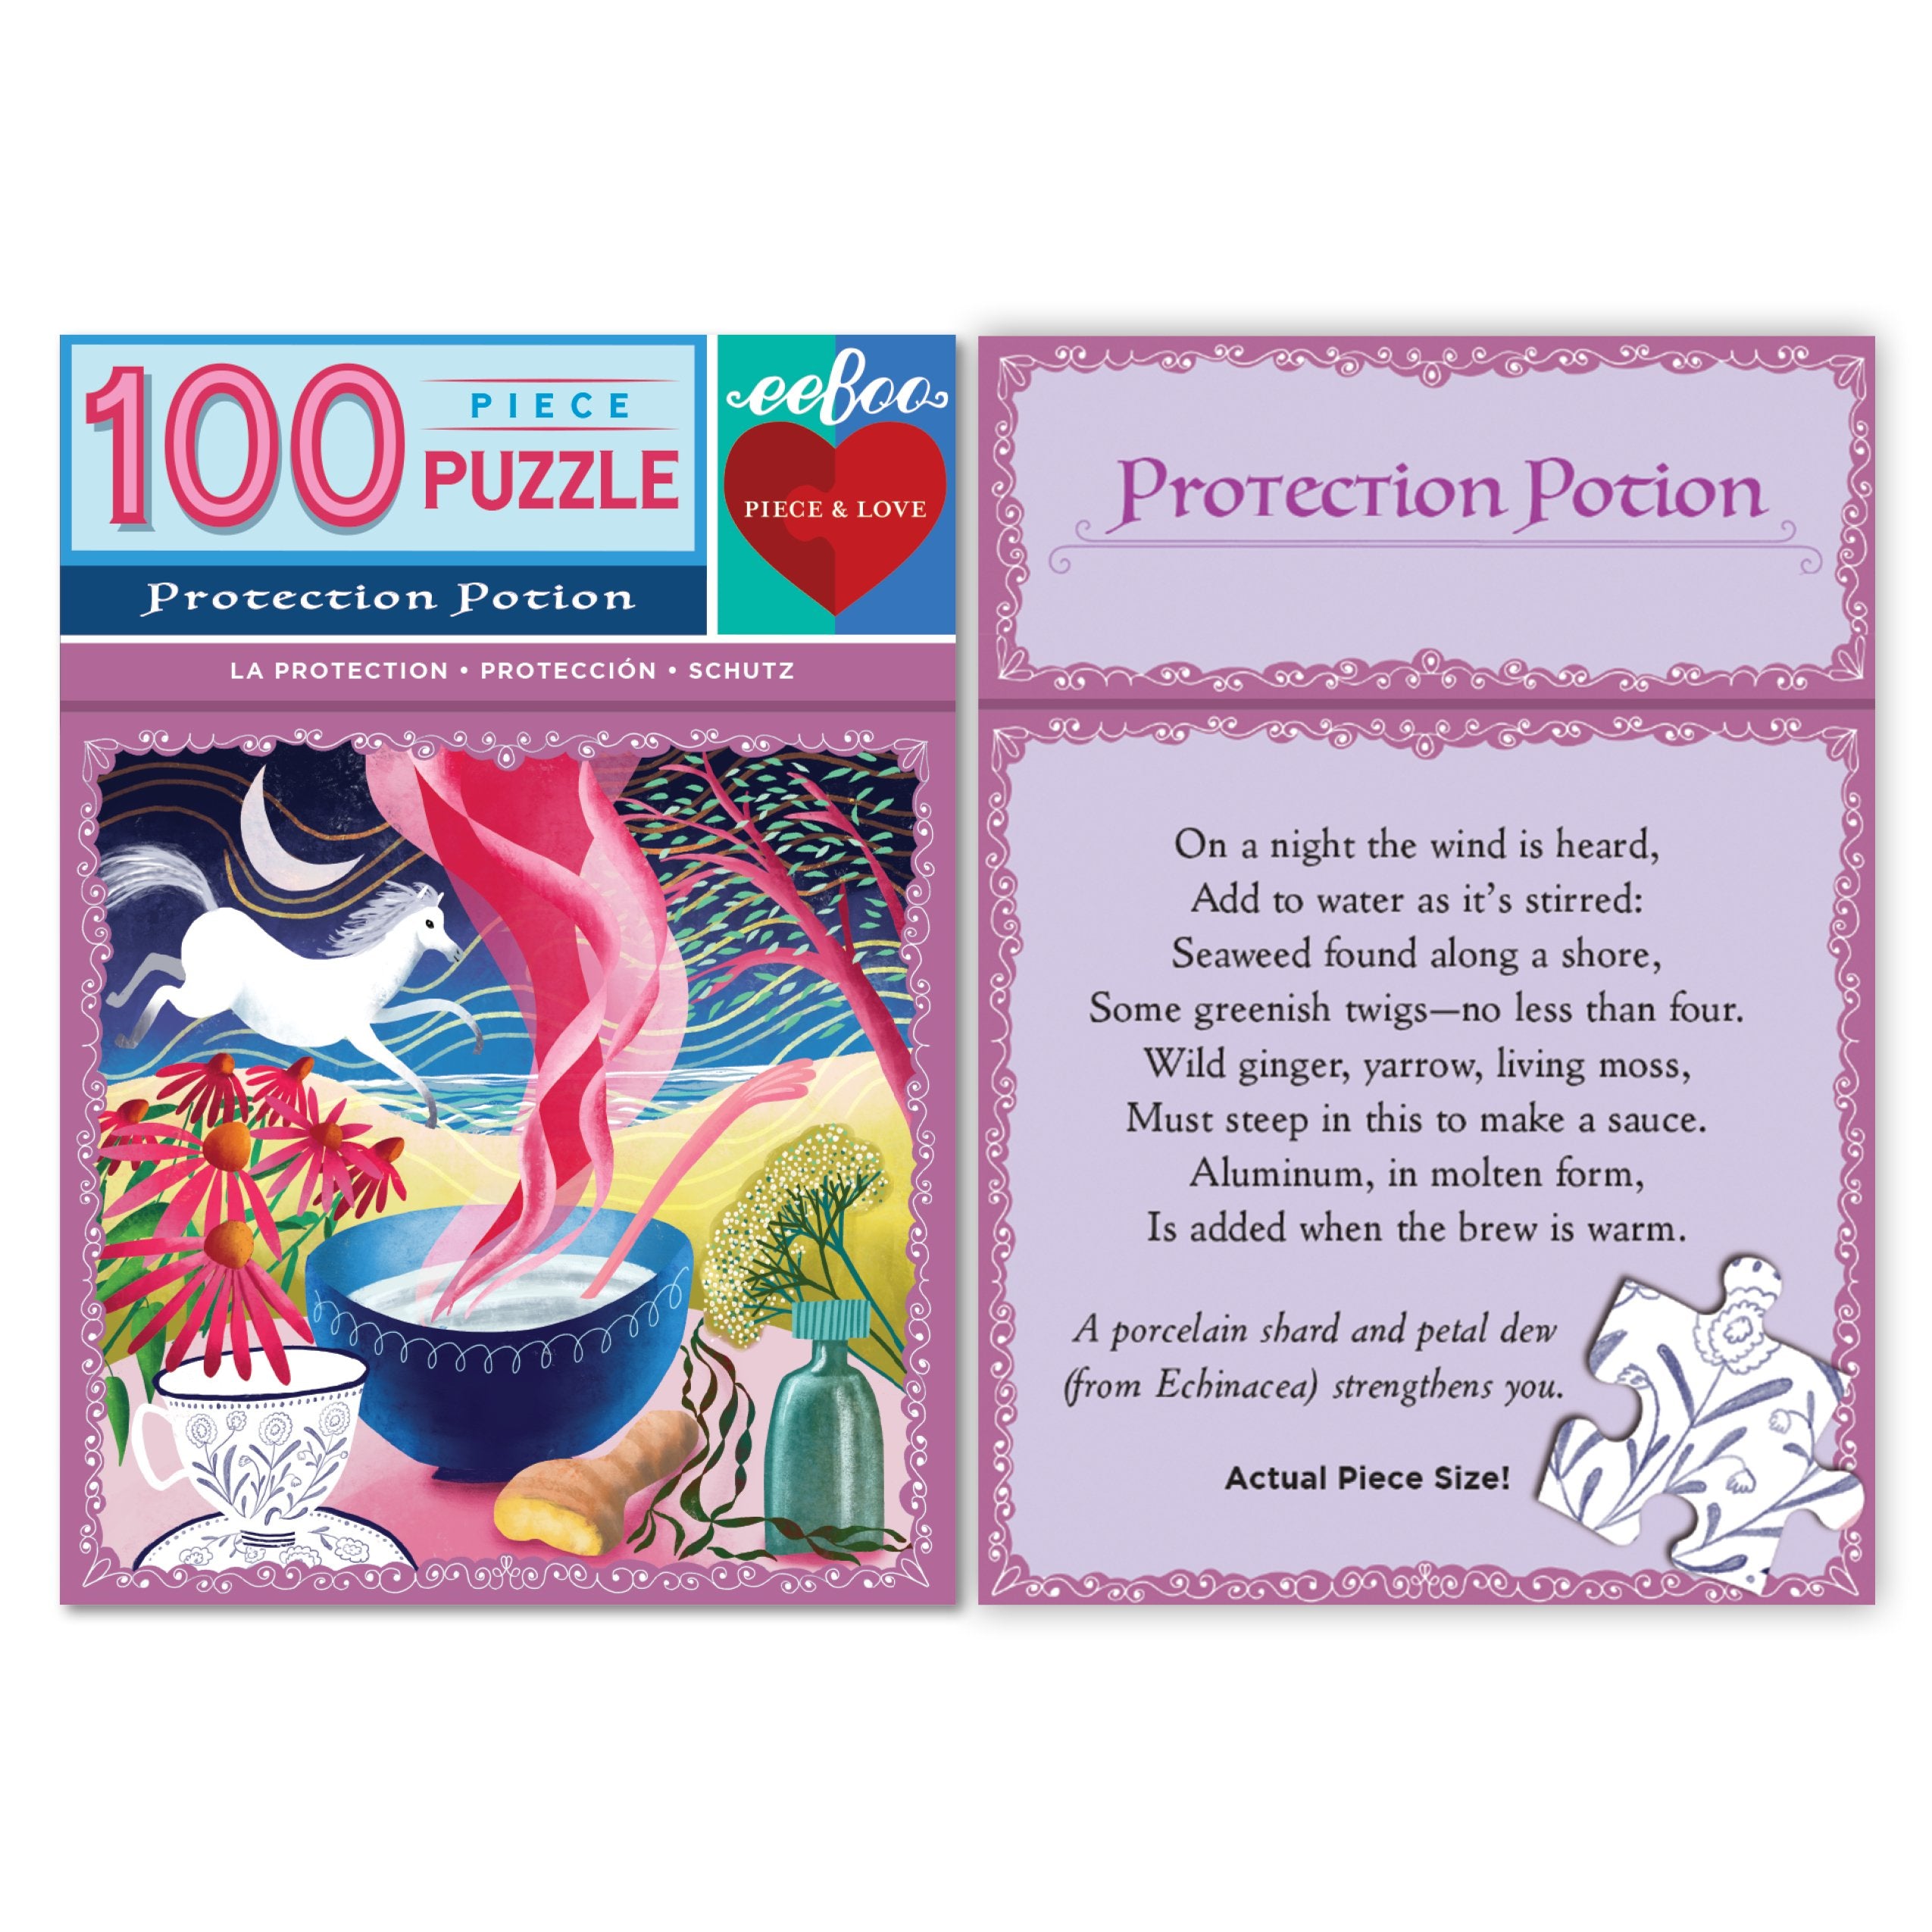 Protection Potion 100 Piece Puzzle    